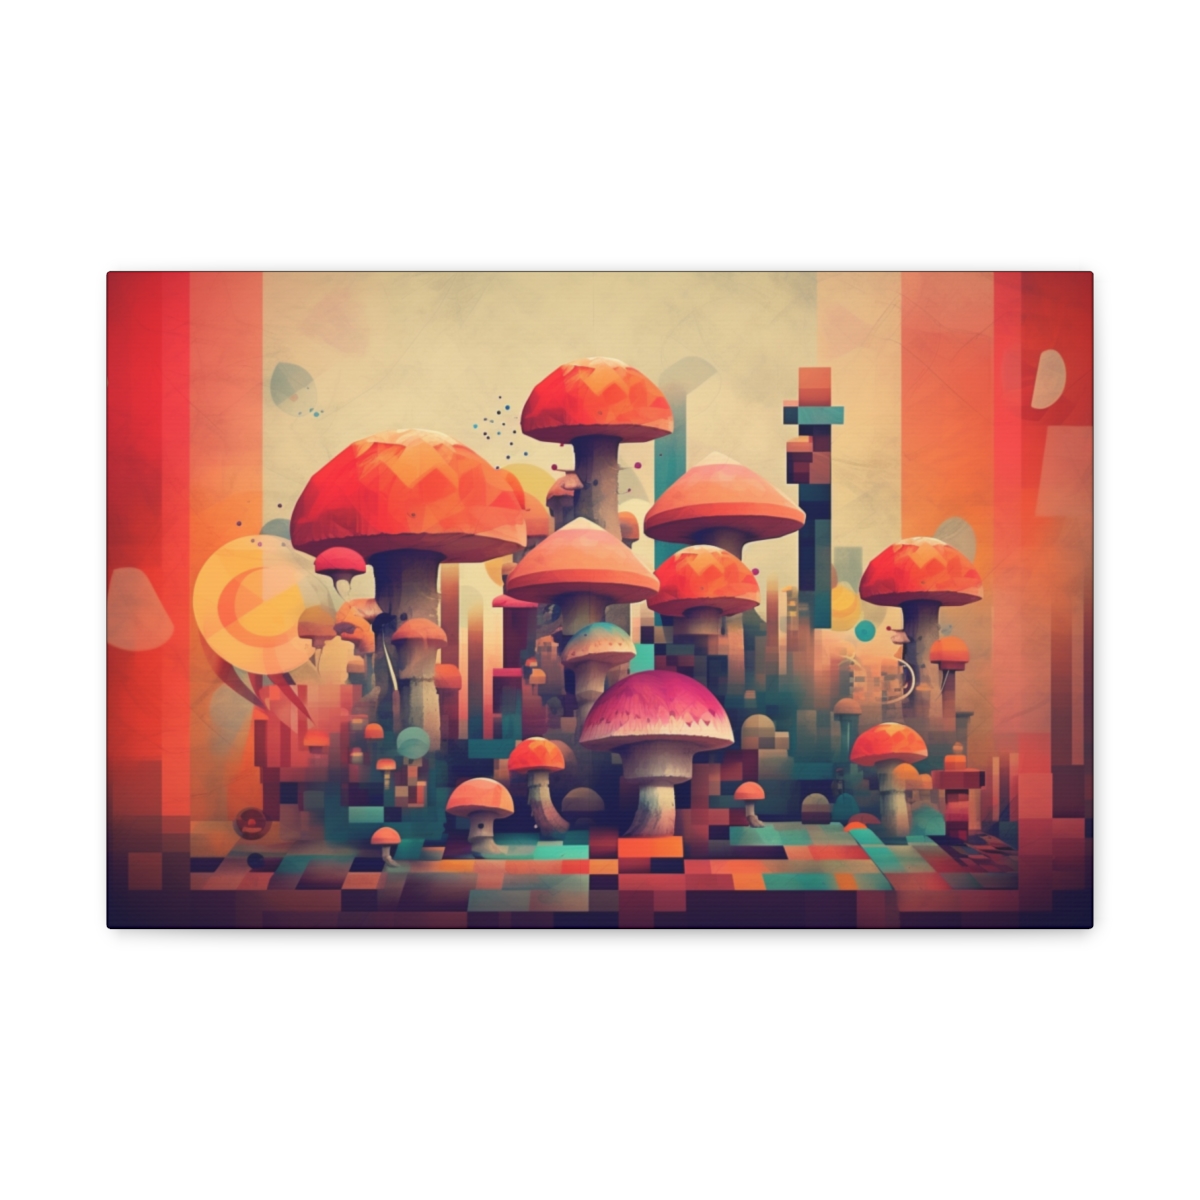 Mushroom Art Canvas Print: Mycological Tourism